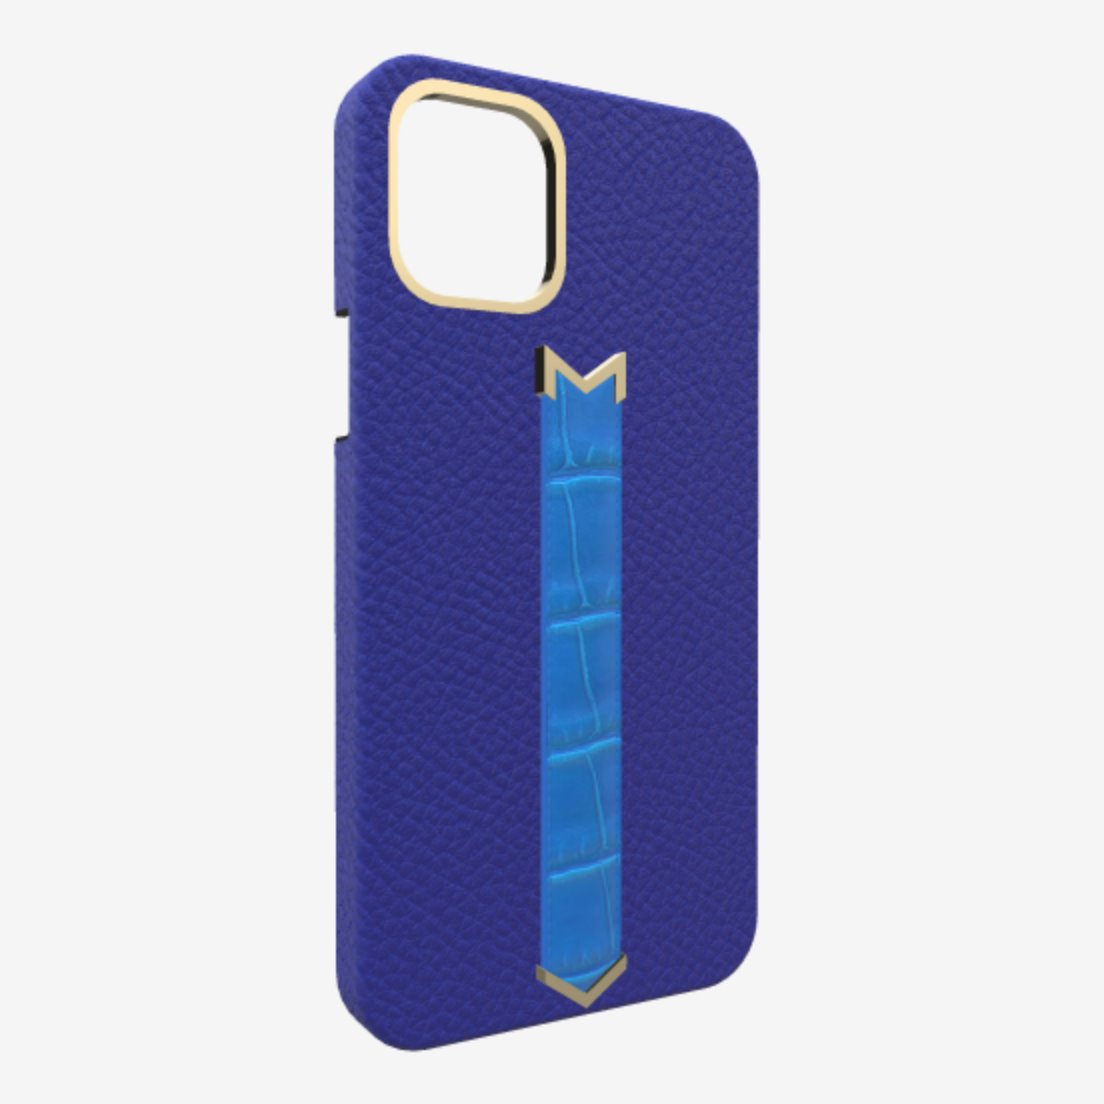 Gold Finger Strap Case for iPhone 13 in Genuine Calfskin and Alligator Electric Blue Royal Blue 